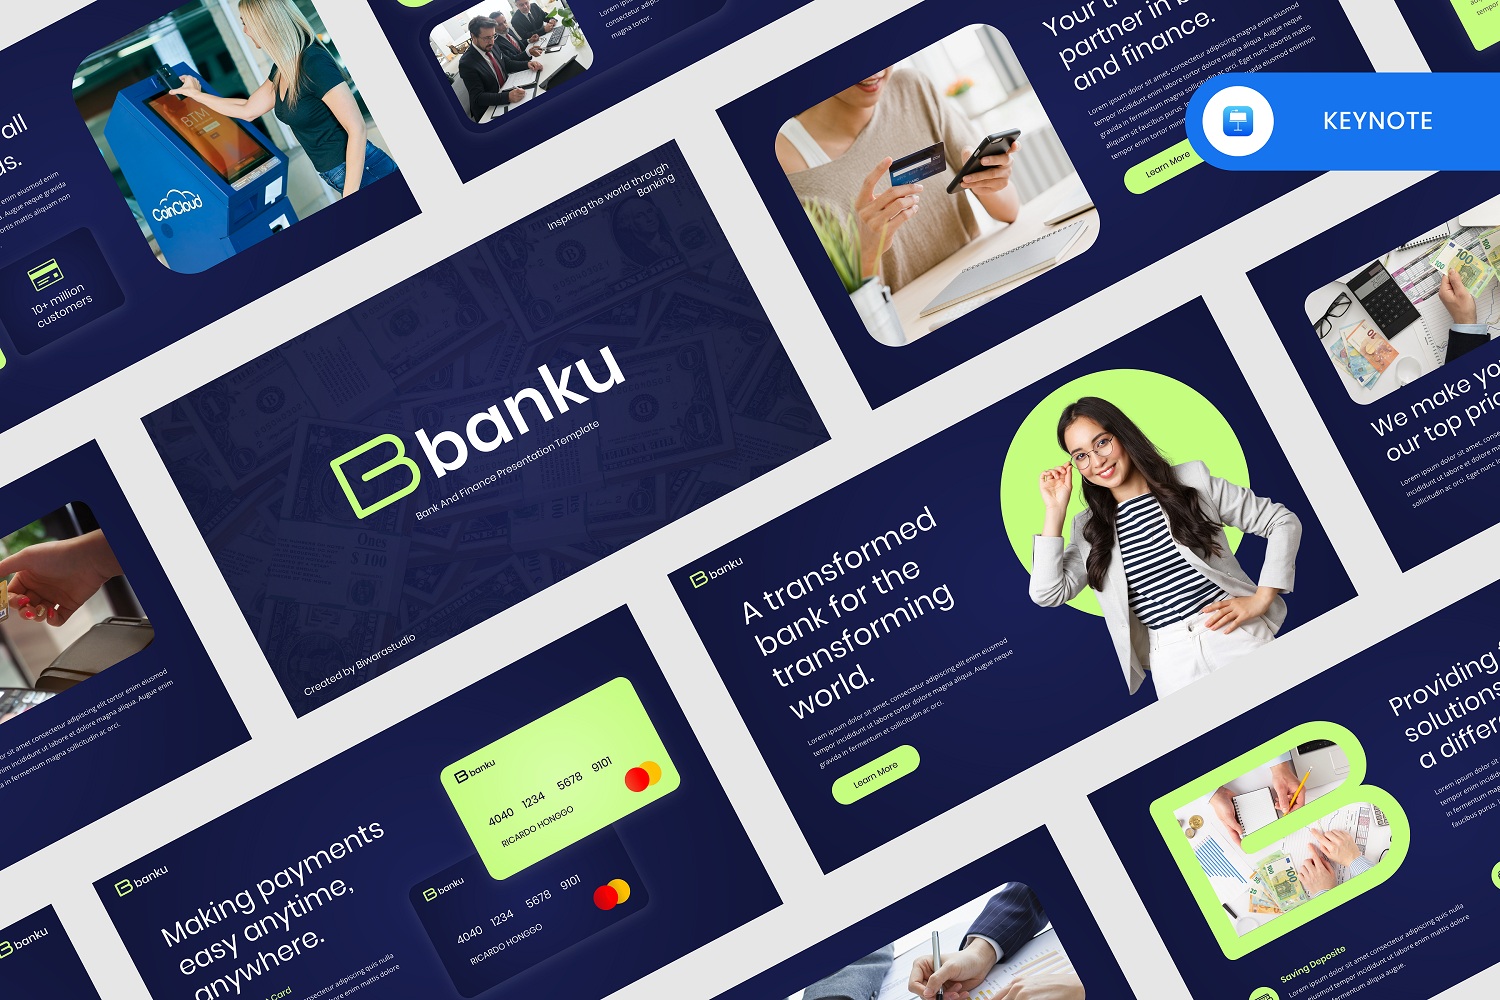 Banku - Banking And Finance Keynote